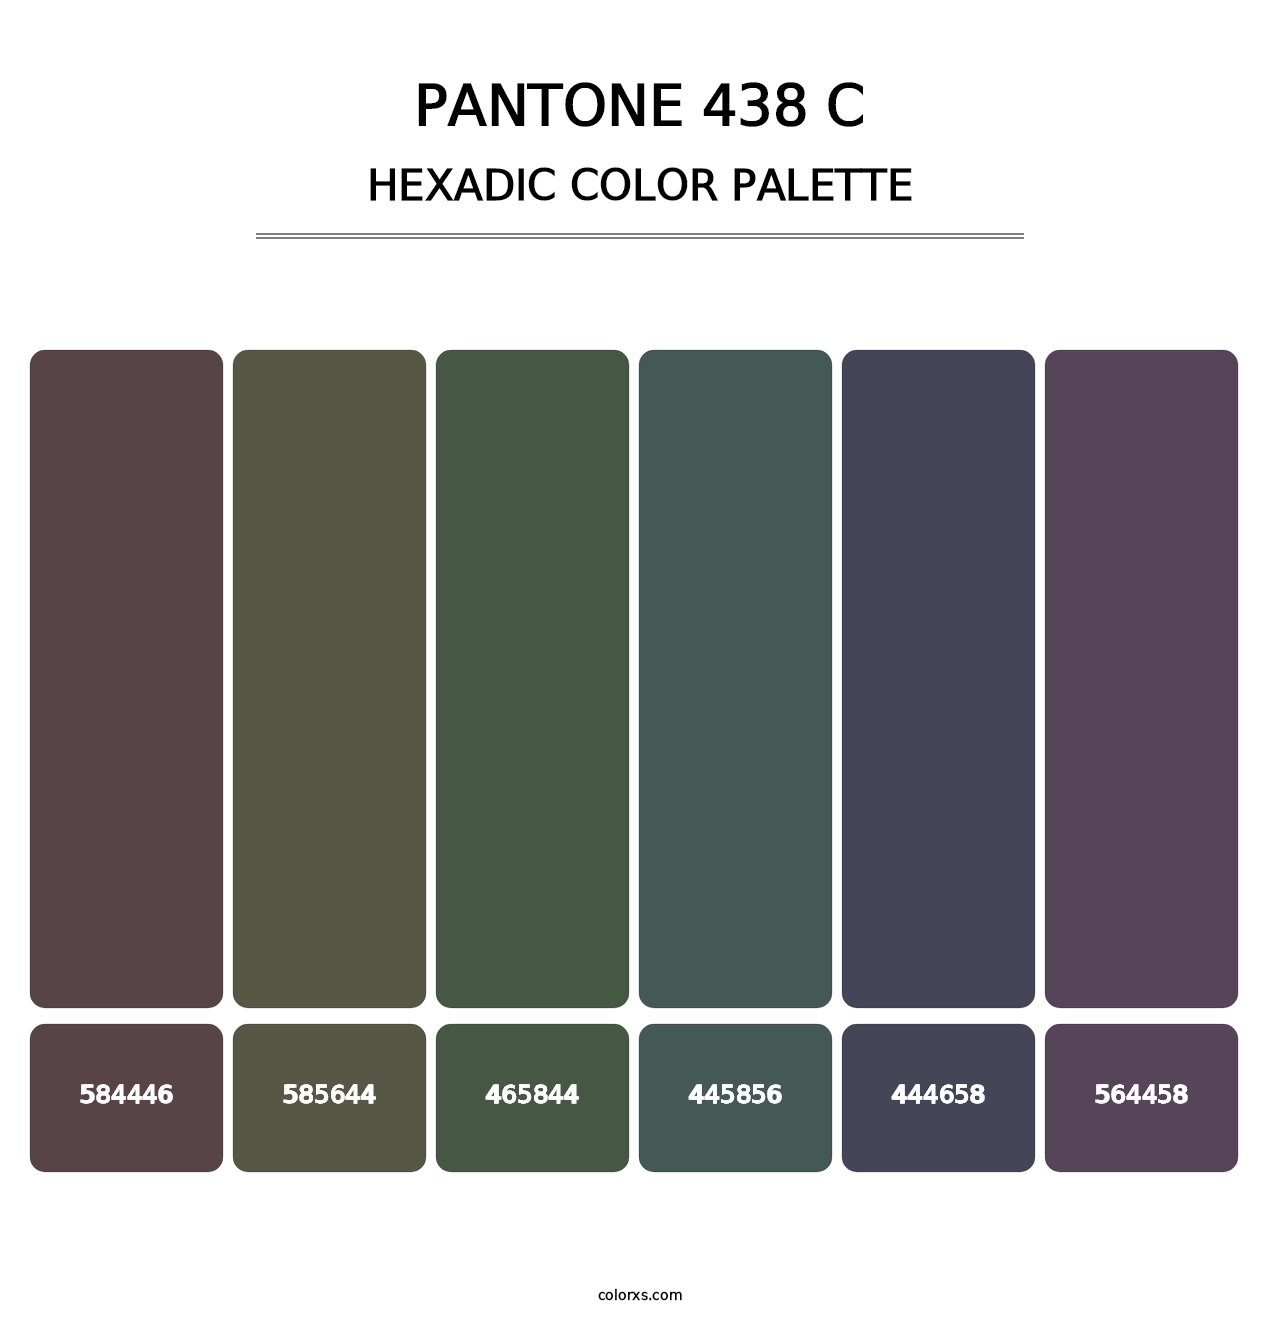 PANTONE 438 C - Hexadic Color Palette